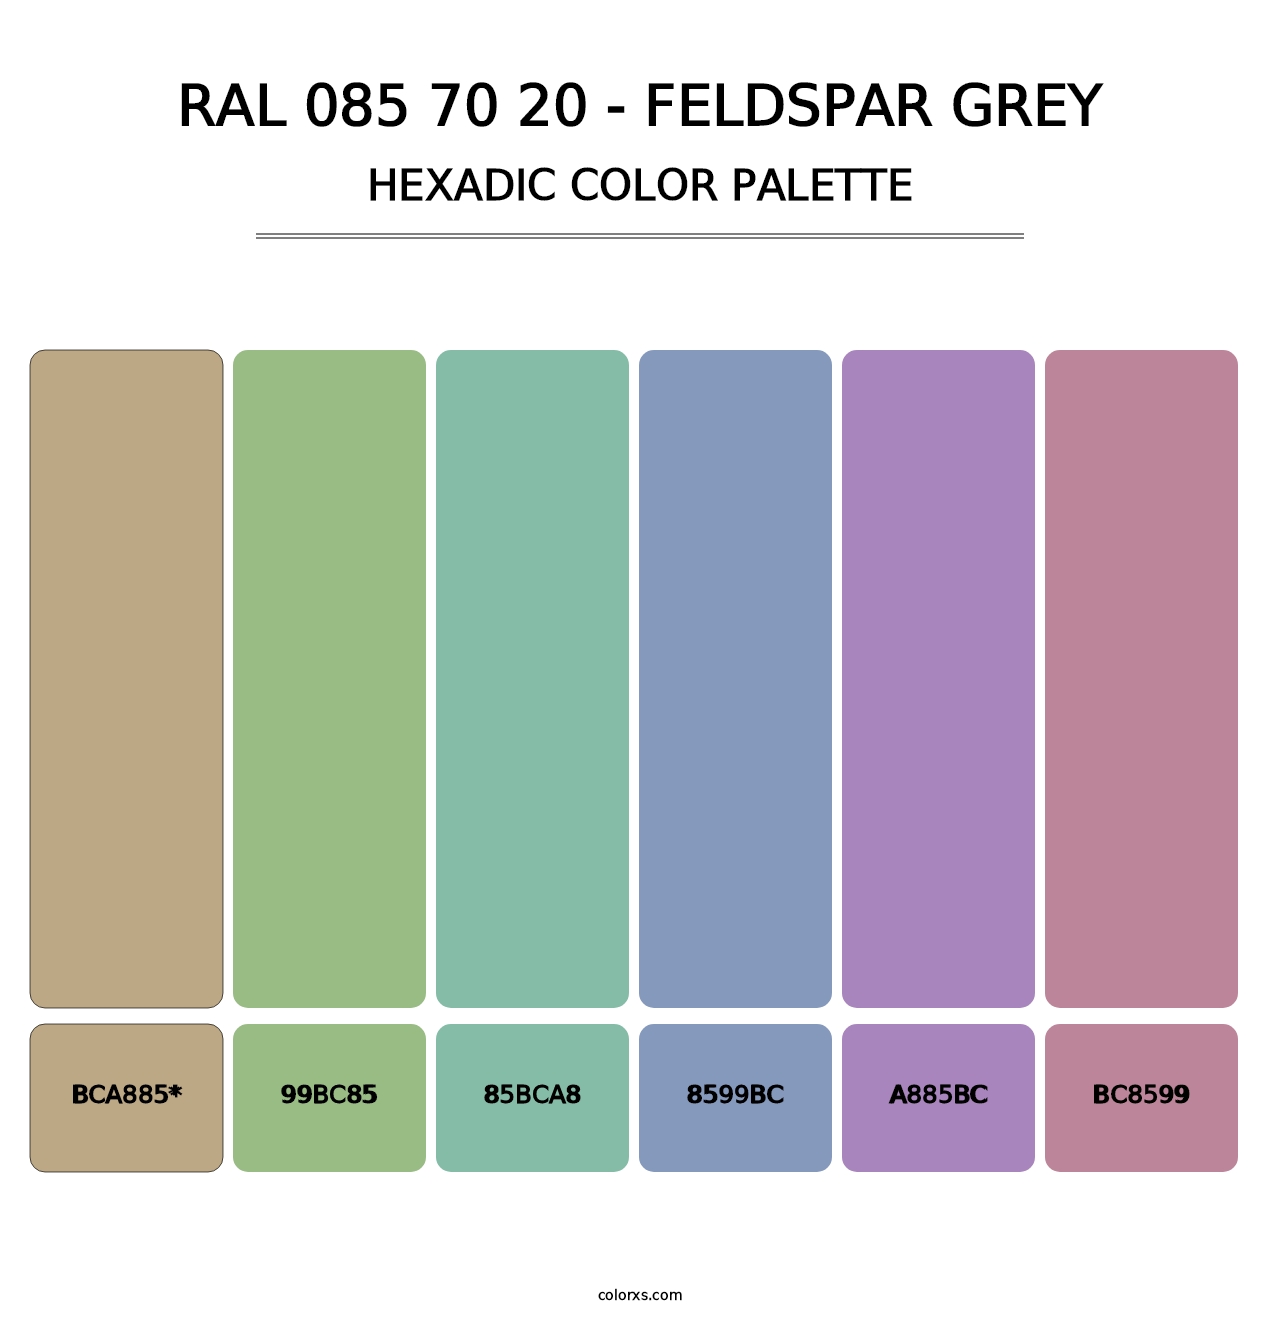 RAL 085 70 20 - Feldspar Grey - Hexadic Color Palette